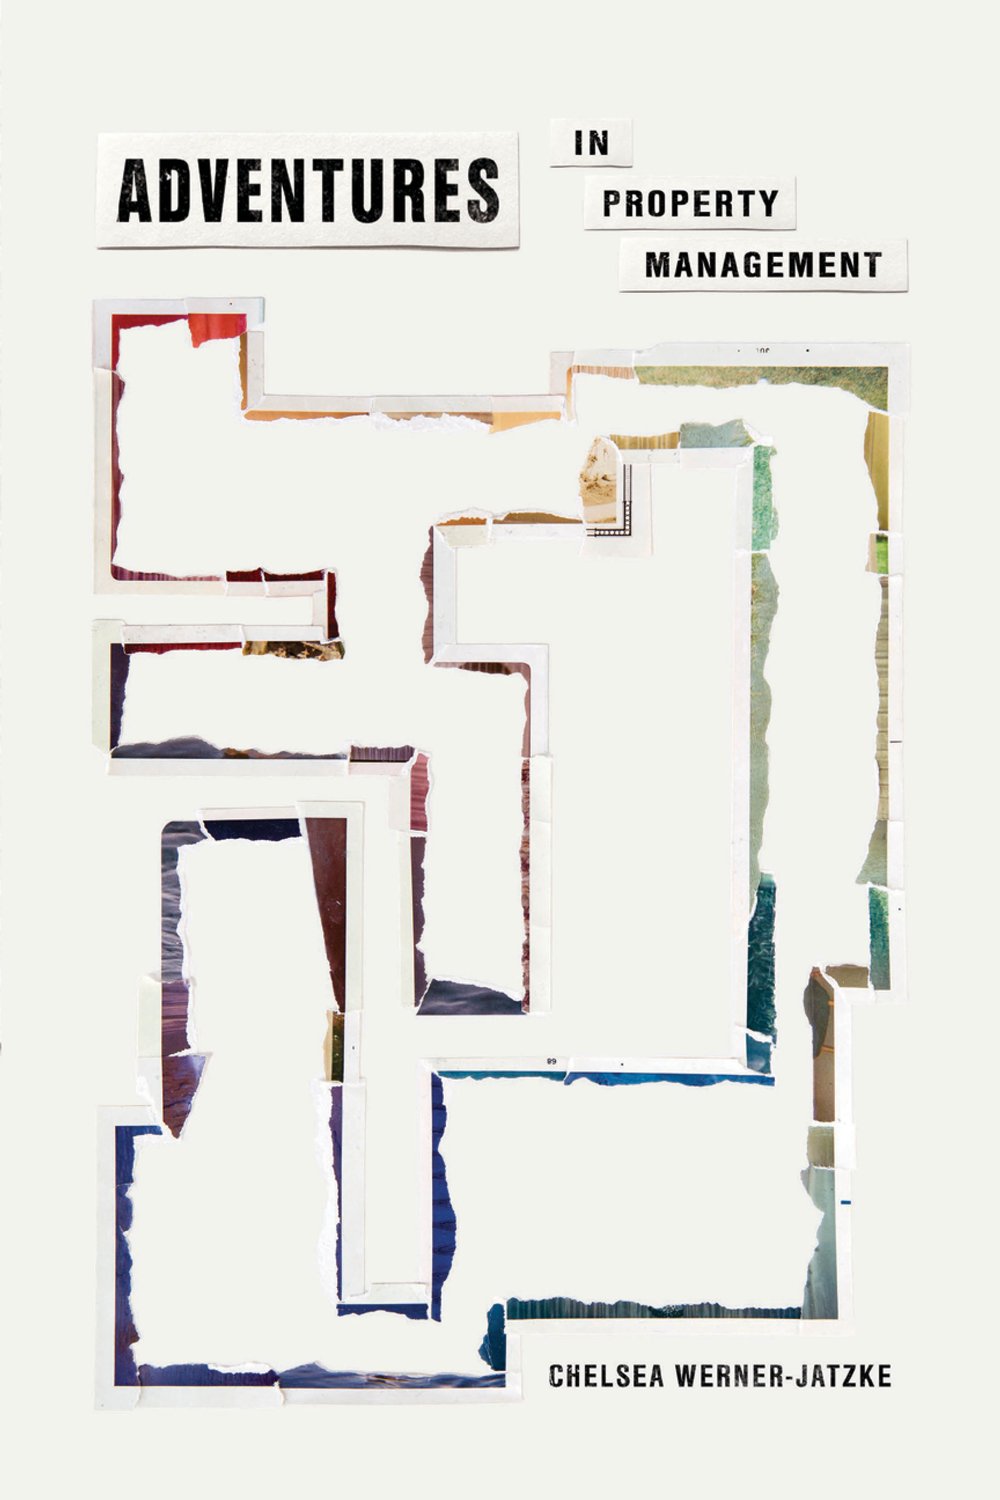 Adventures in Property Management by Chelsea Werner-Jatzke